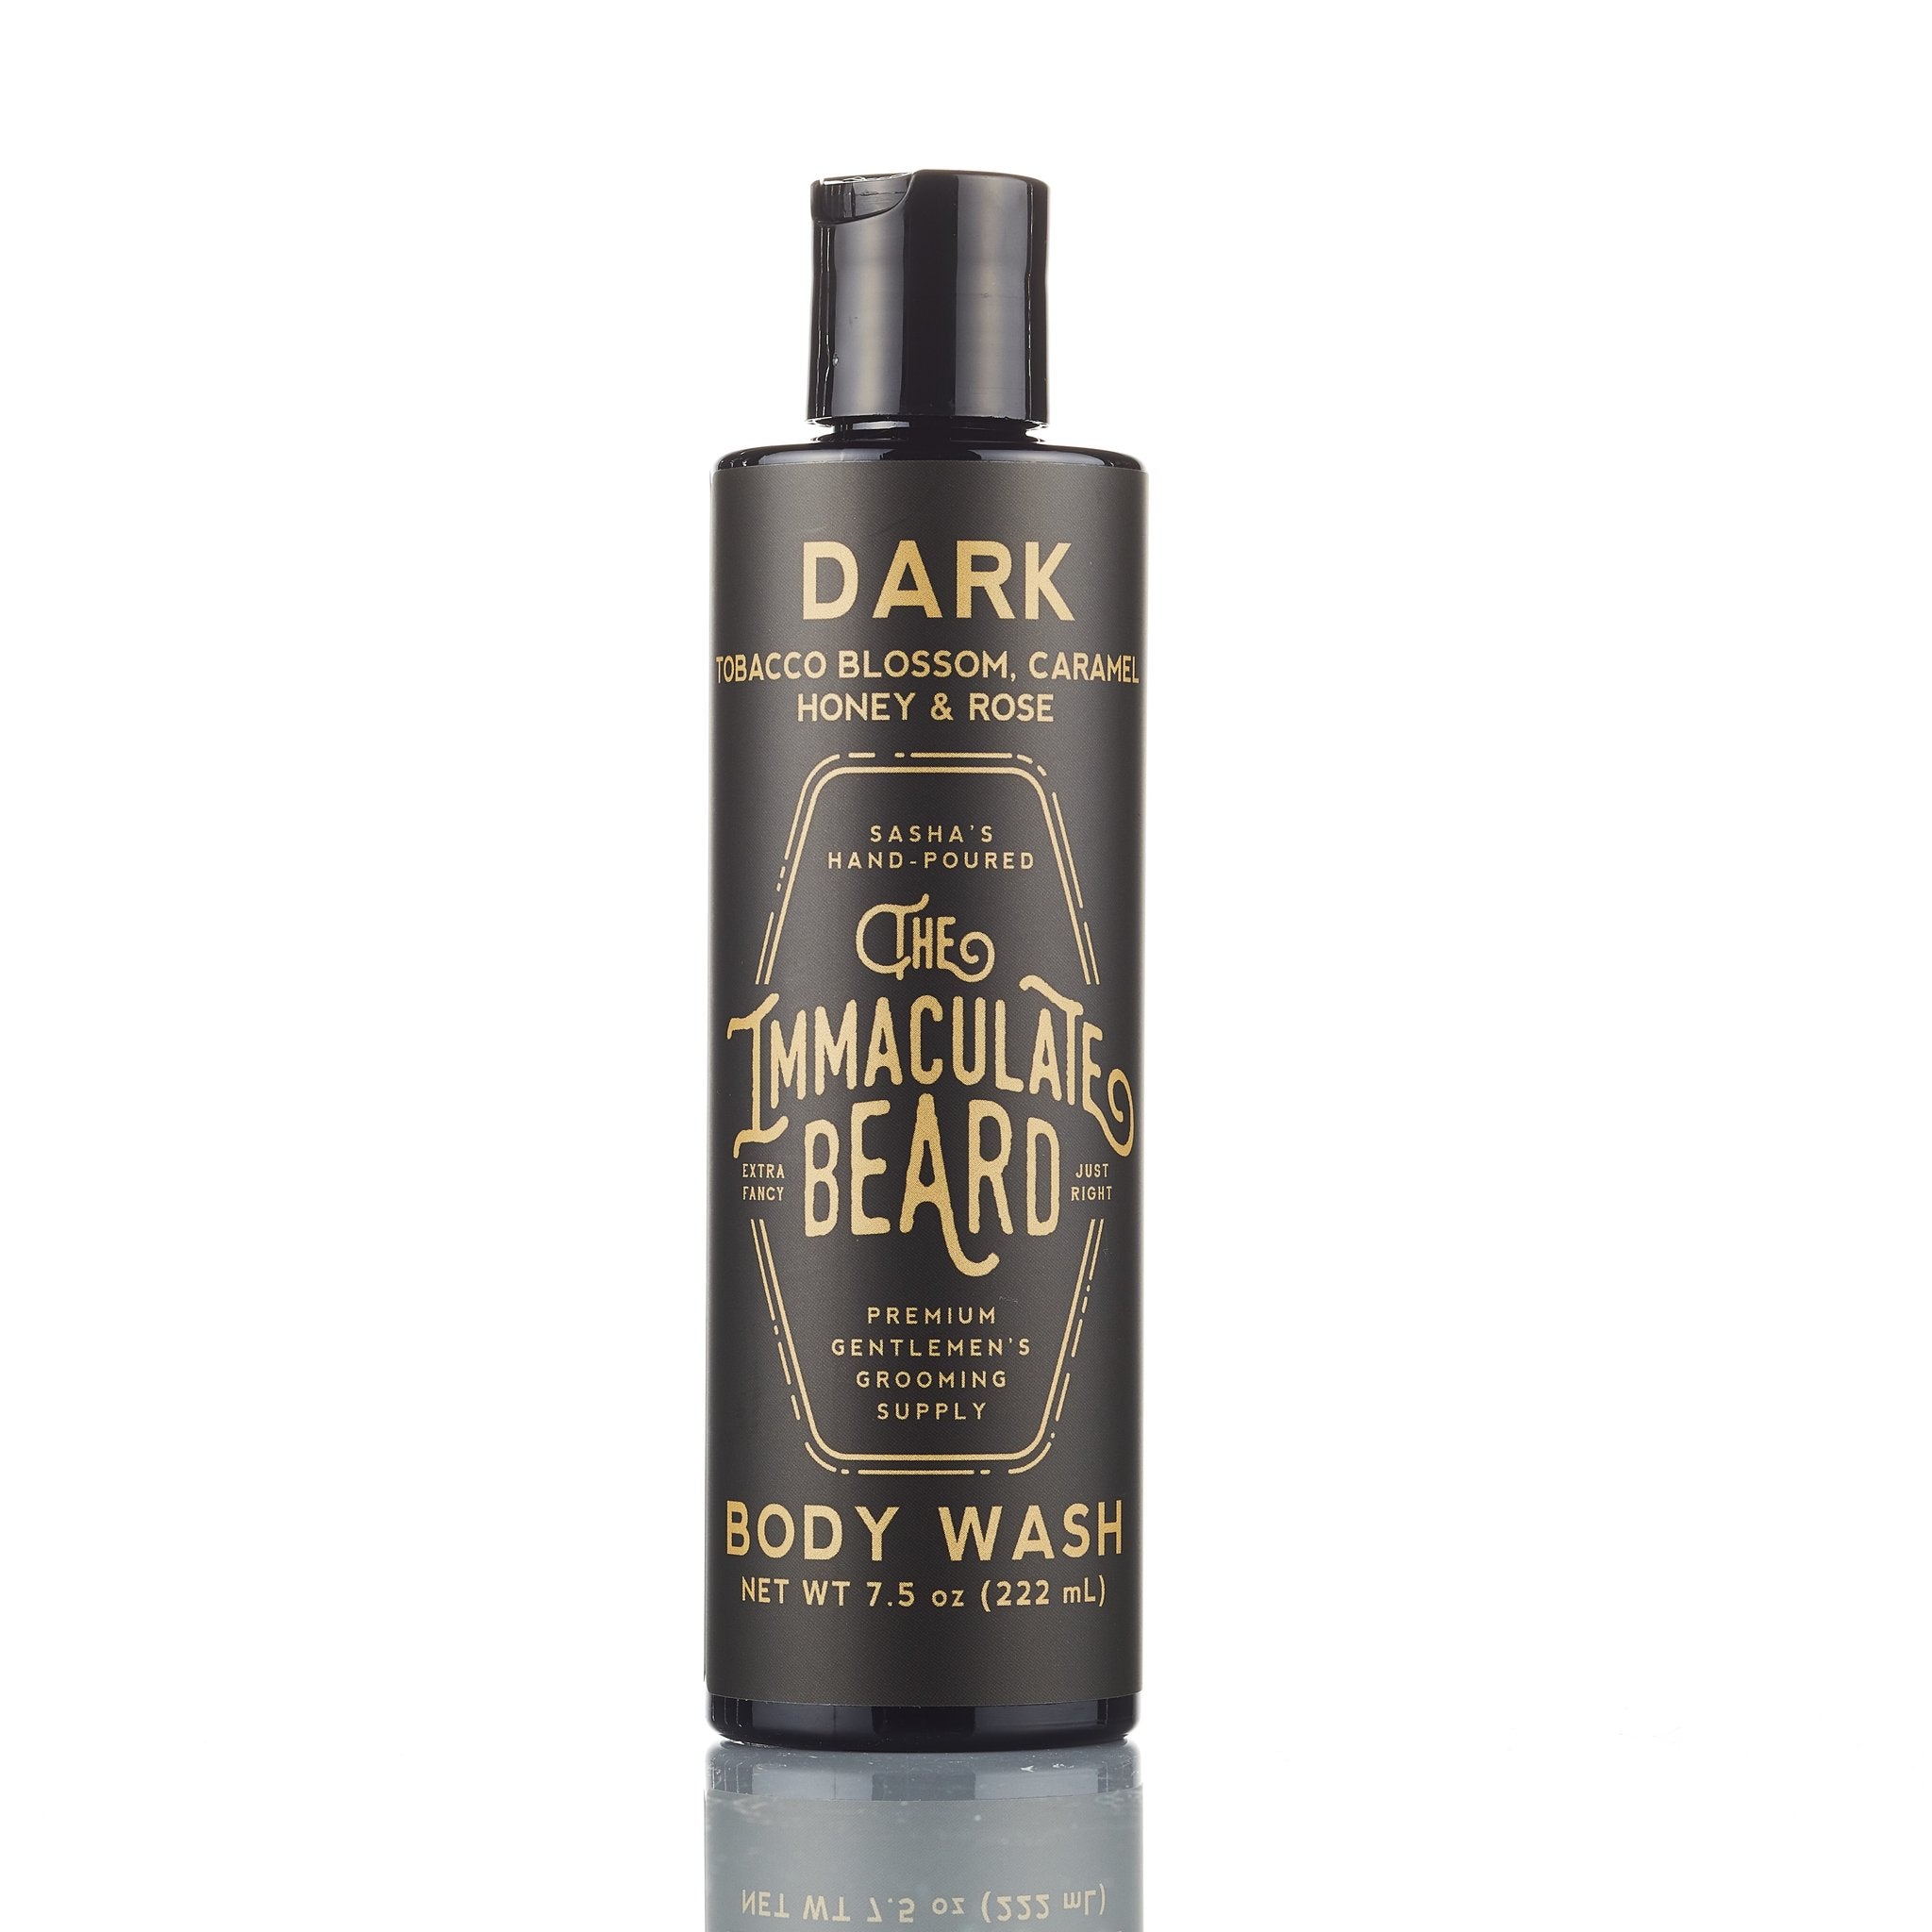 The Immaculate Beard - Dark Body Wash